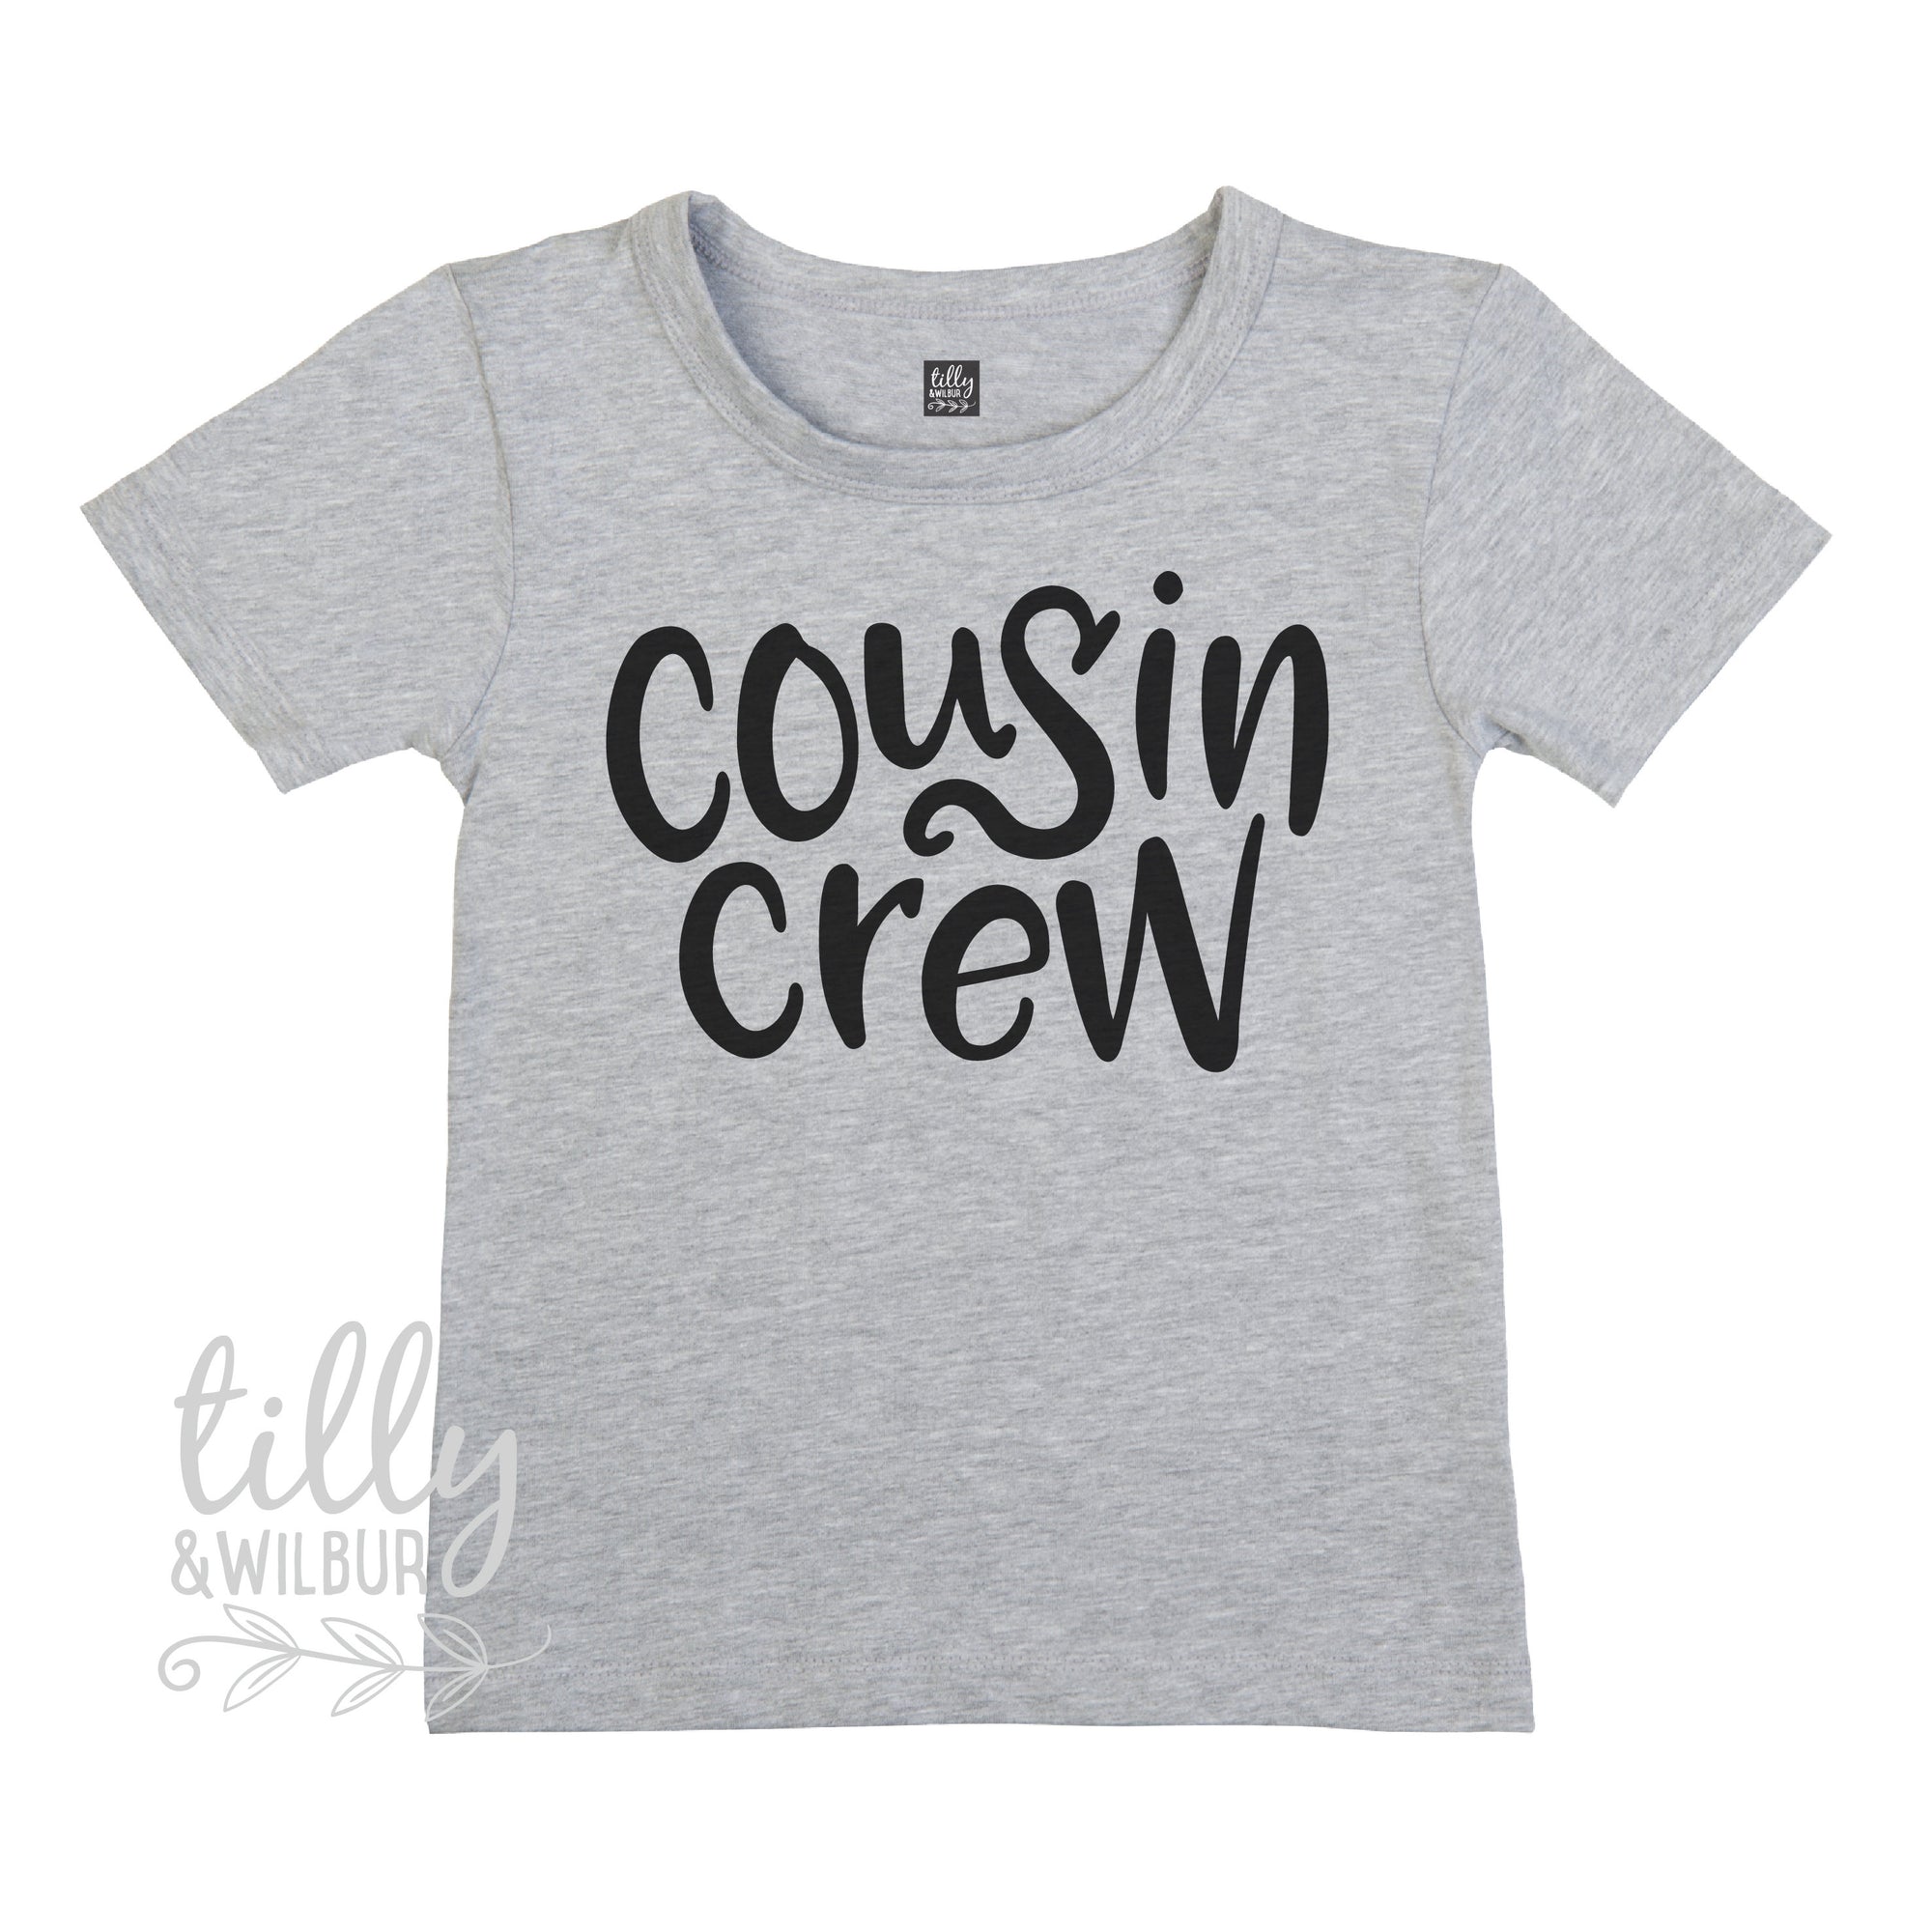 Cousin Crew T-Shirt